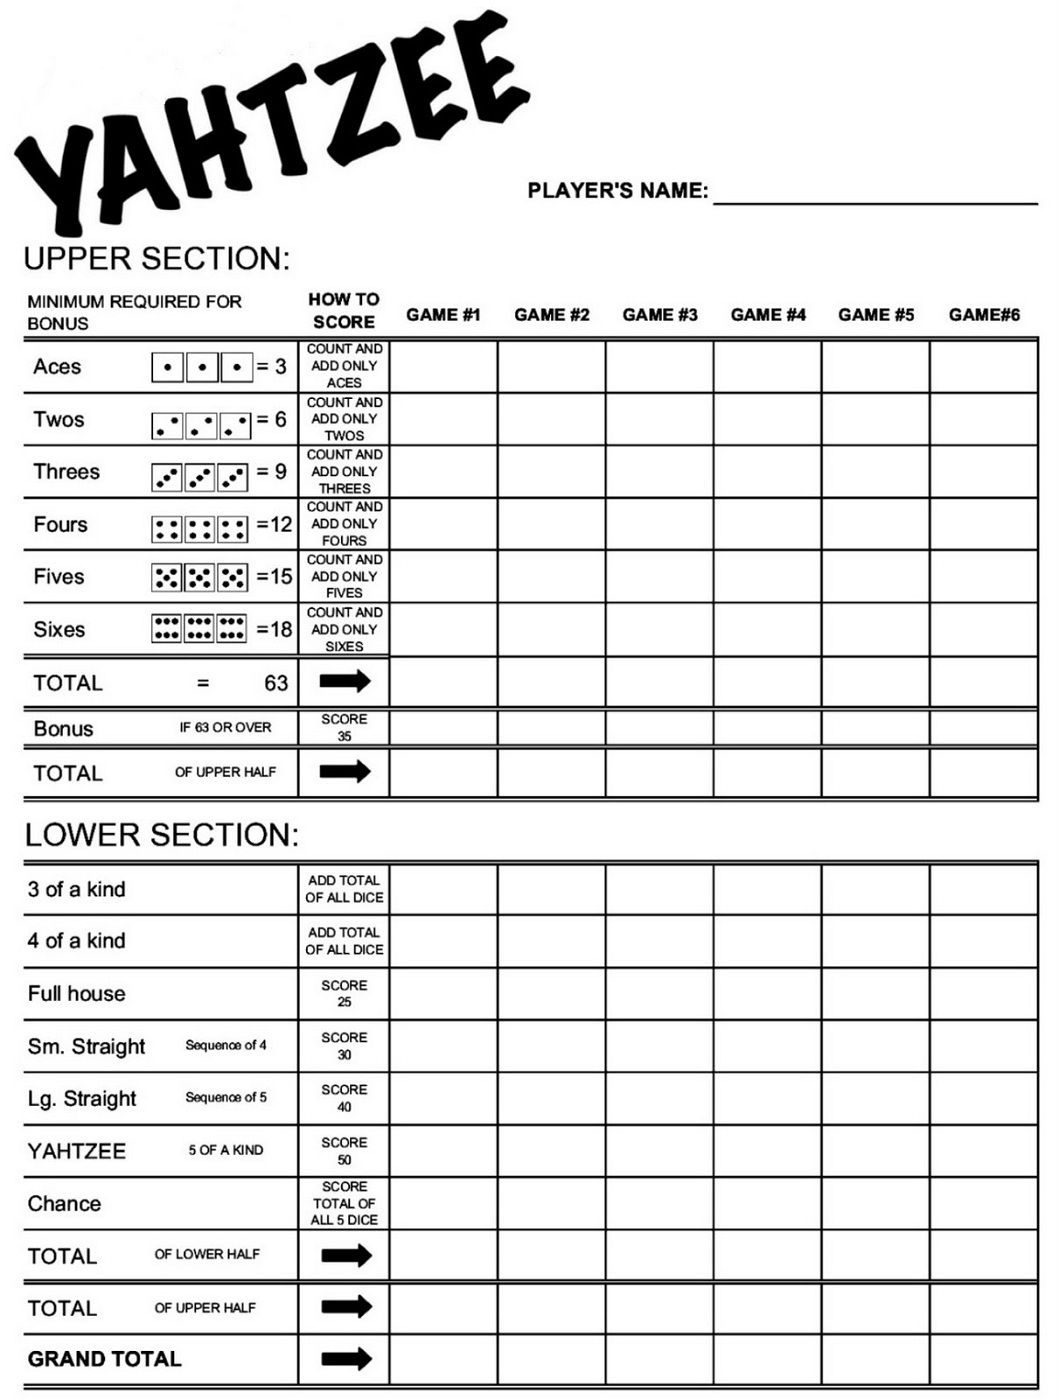 Yahtzee Score Sheets Printable | Yahtzee Score Sheets | Pinterest - Free Printable Yahtzee Score Sheets